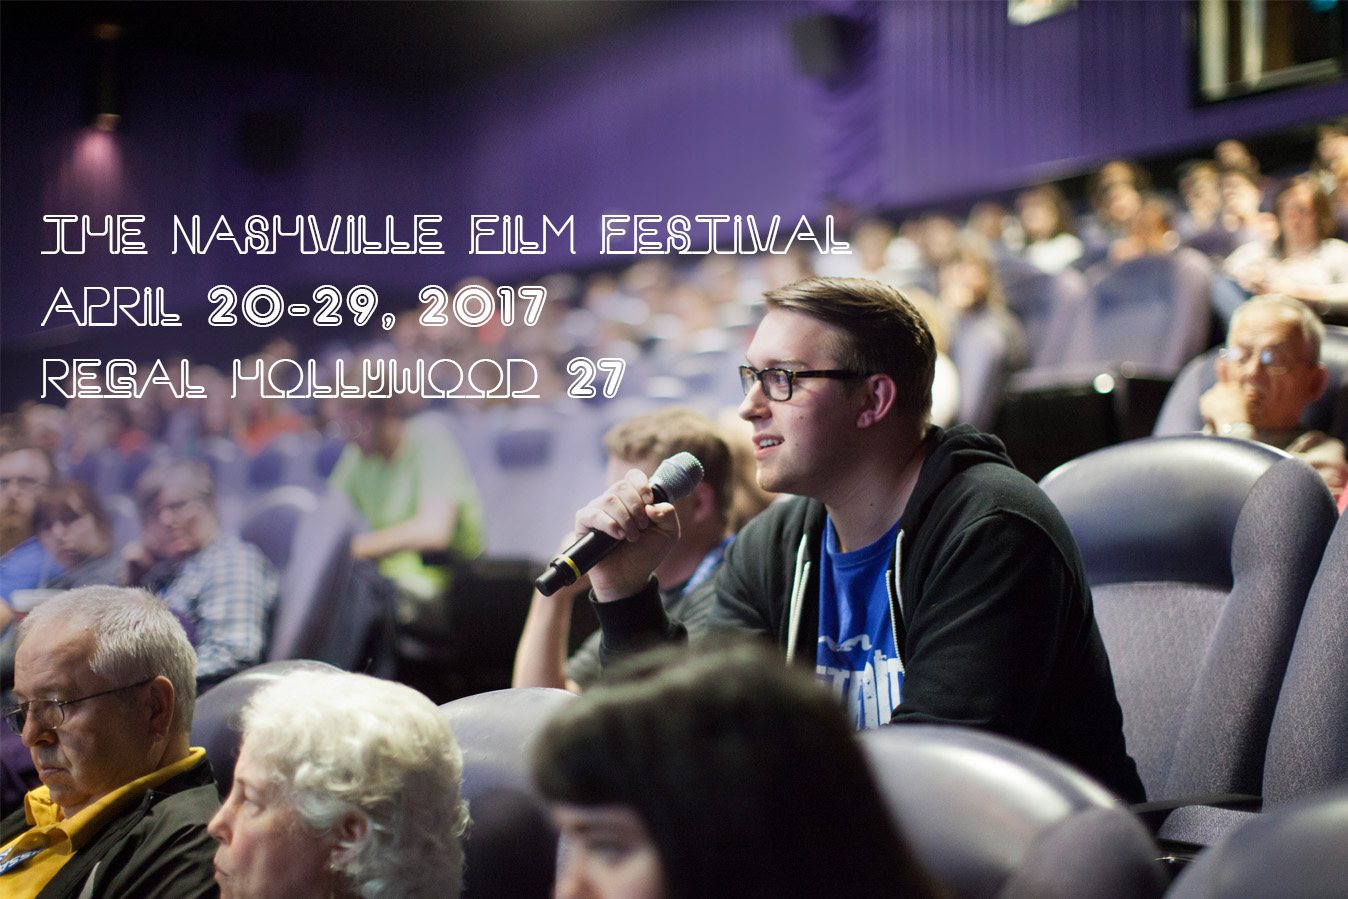 Nashville Film Festival | May 10-19, 2018 | Regal Hollywood 27 Cinema Nashville Film ...